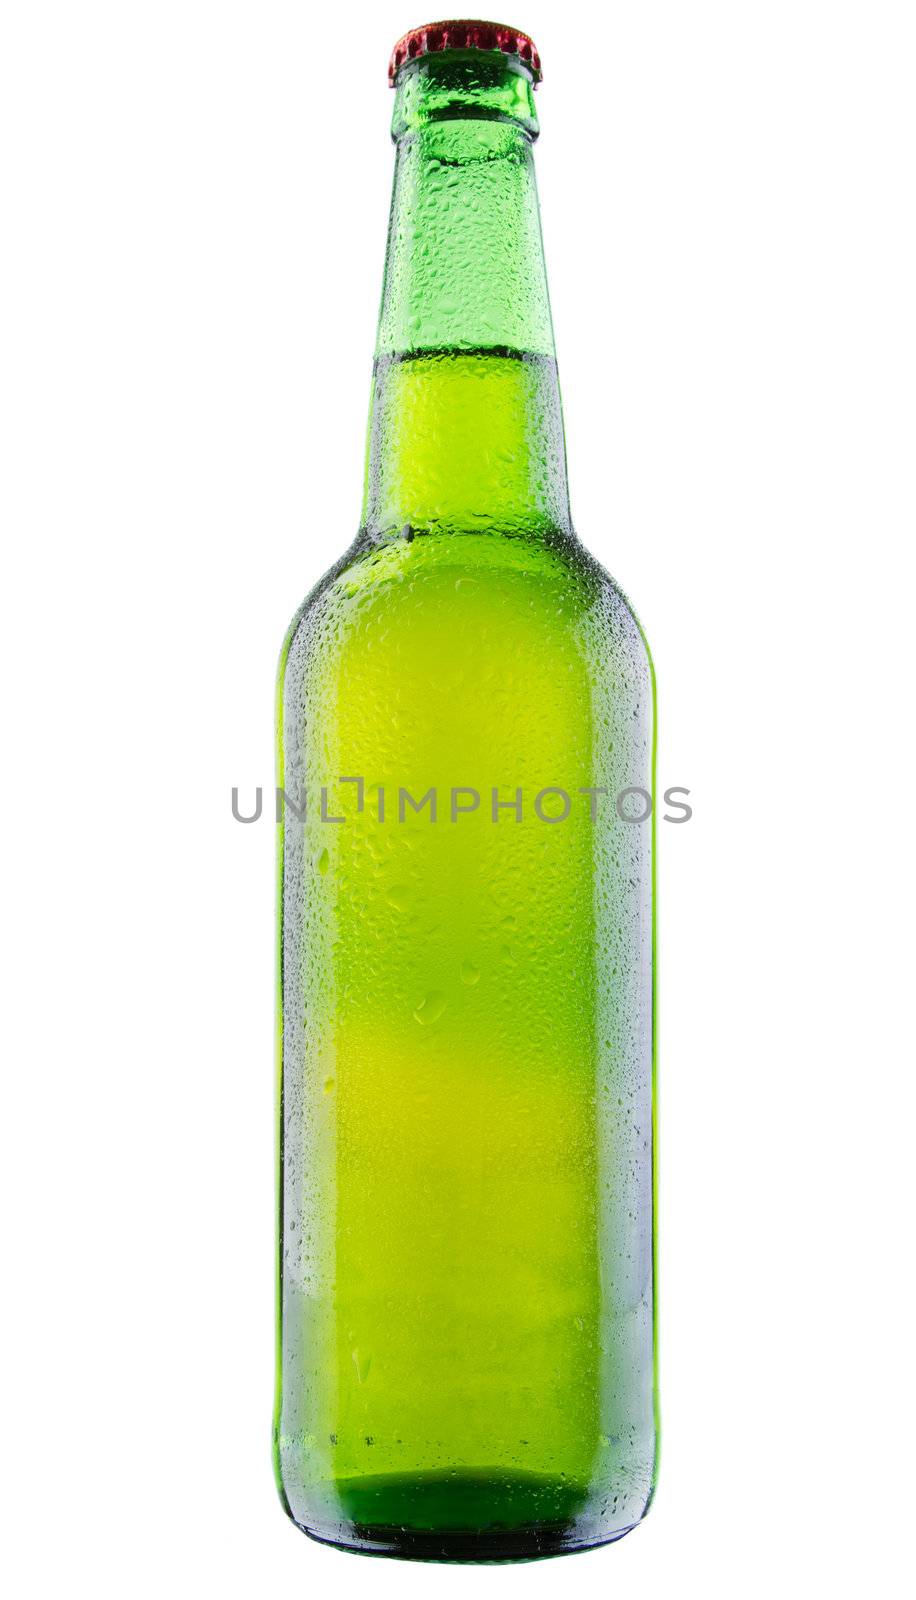 Beer bottles isolated on white background by Gdolgikh